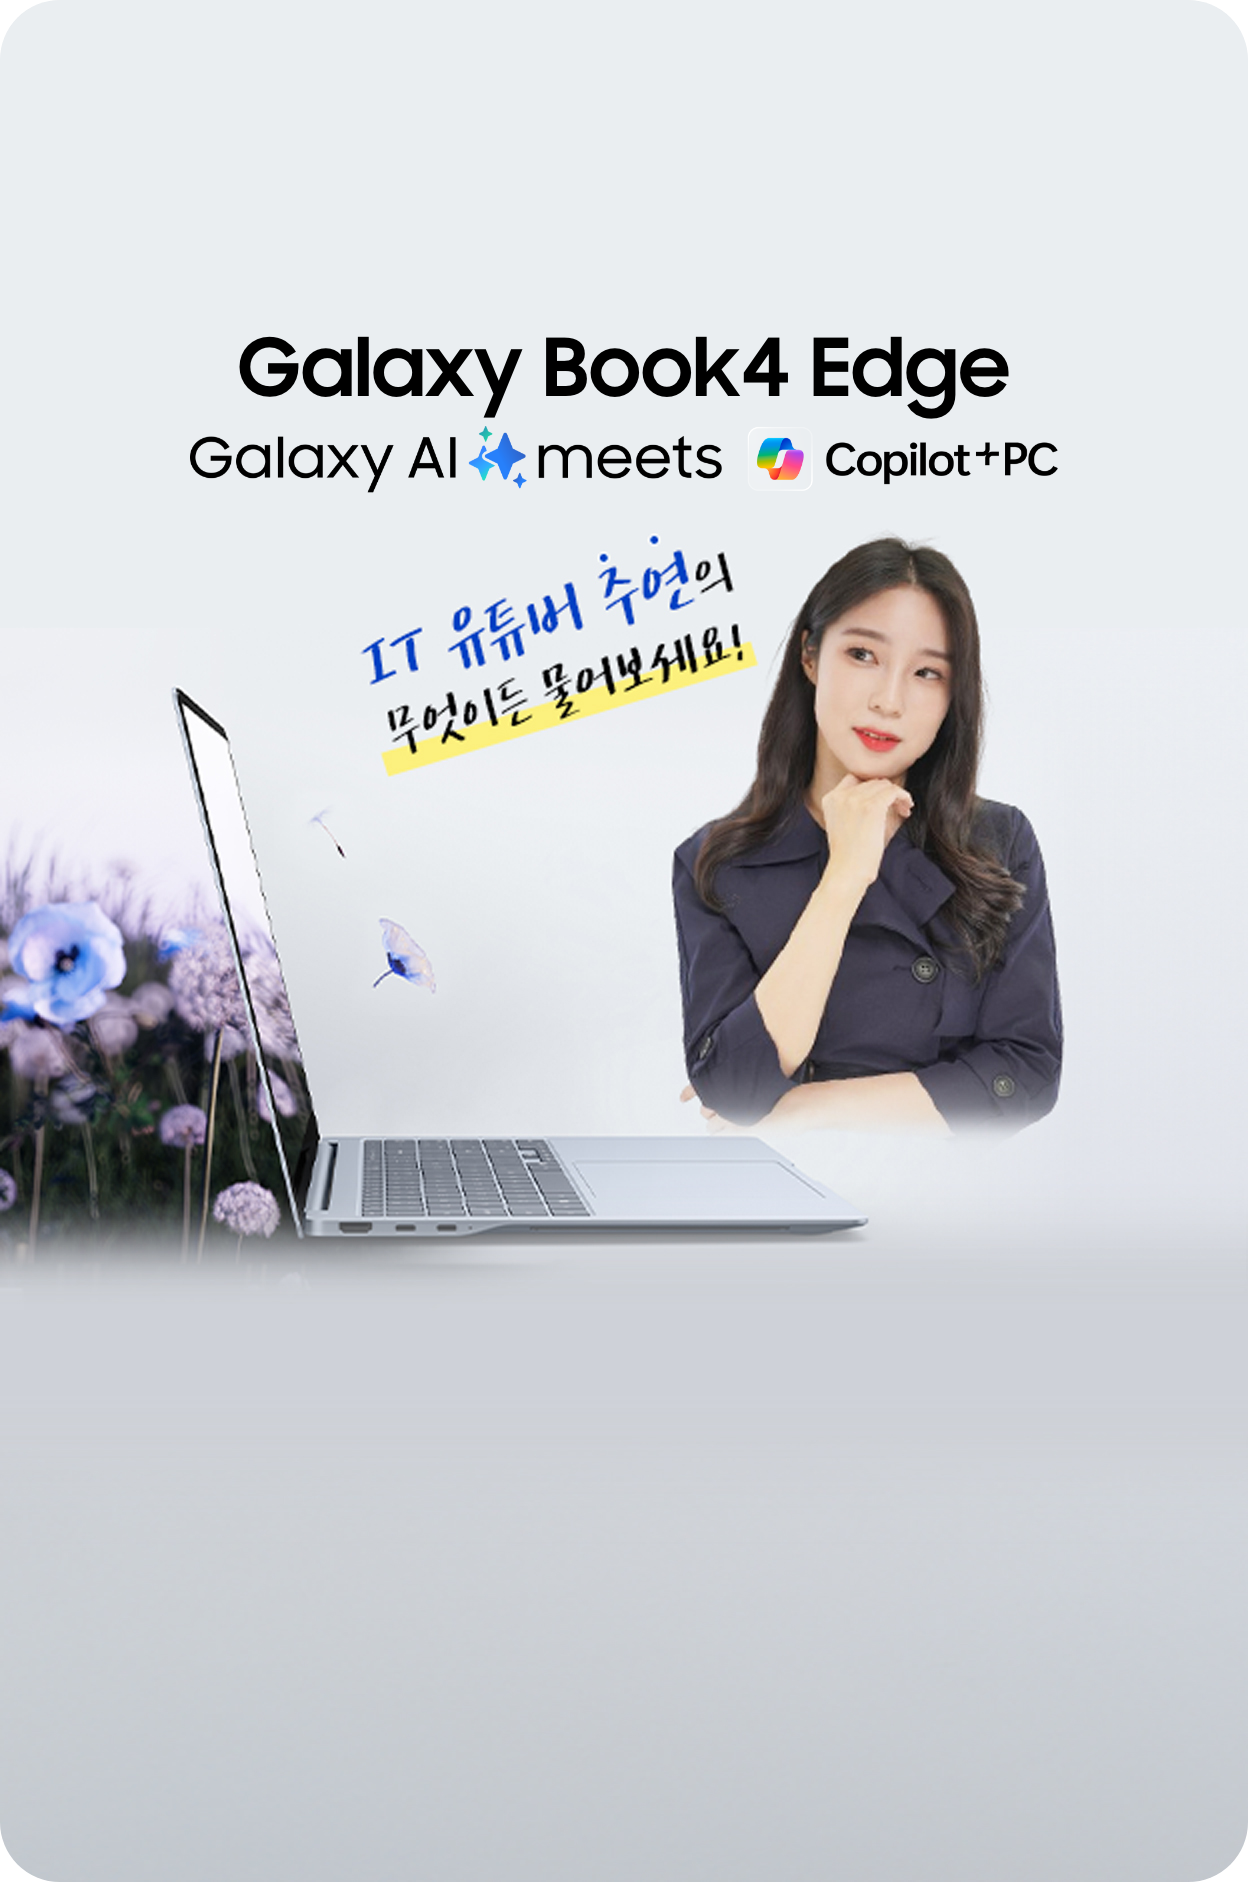 Galaxy Book4 Edge가 측면으로 놓여져 있으며 배경에는 보라색의 꽃들이 피어 있습니다. 메인 타이틀로는 'Galaxy Book4 Edge 앵콜'과 하단에는 Galaxy AI (별) meets, Copilot+PC로 기입되어 있습니다.